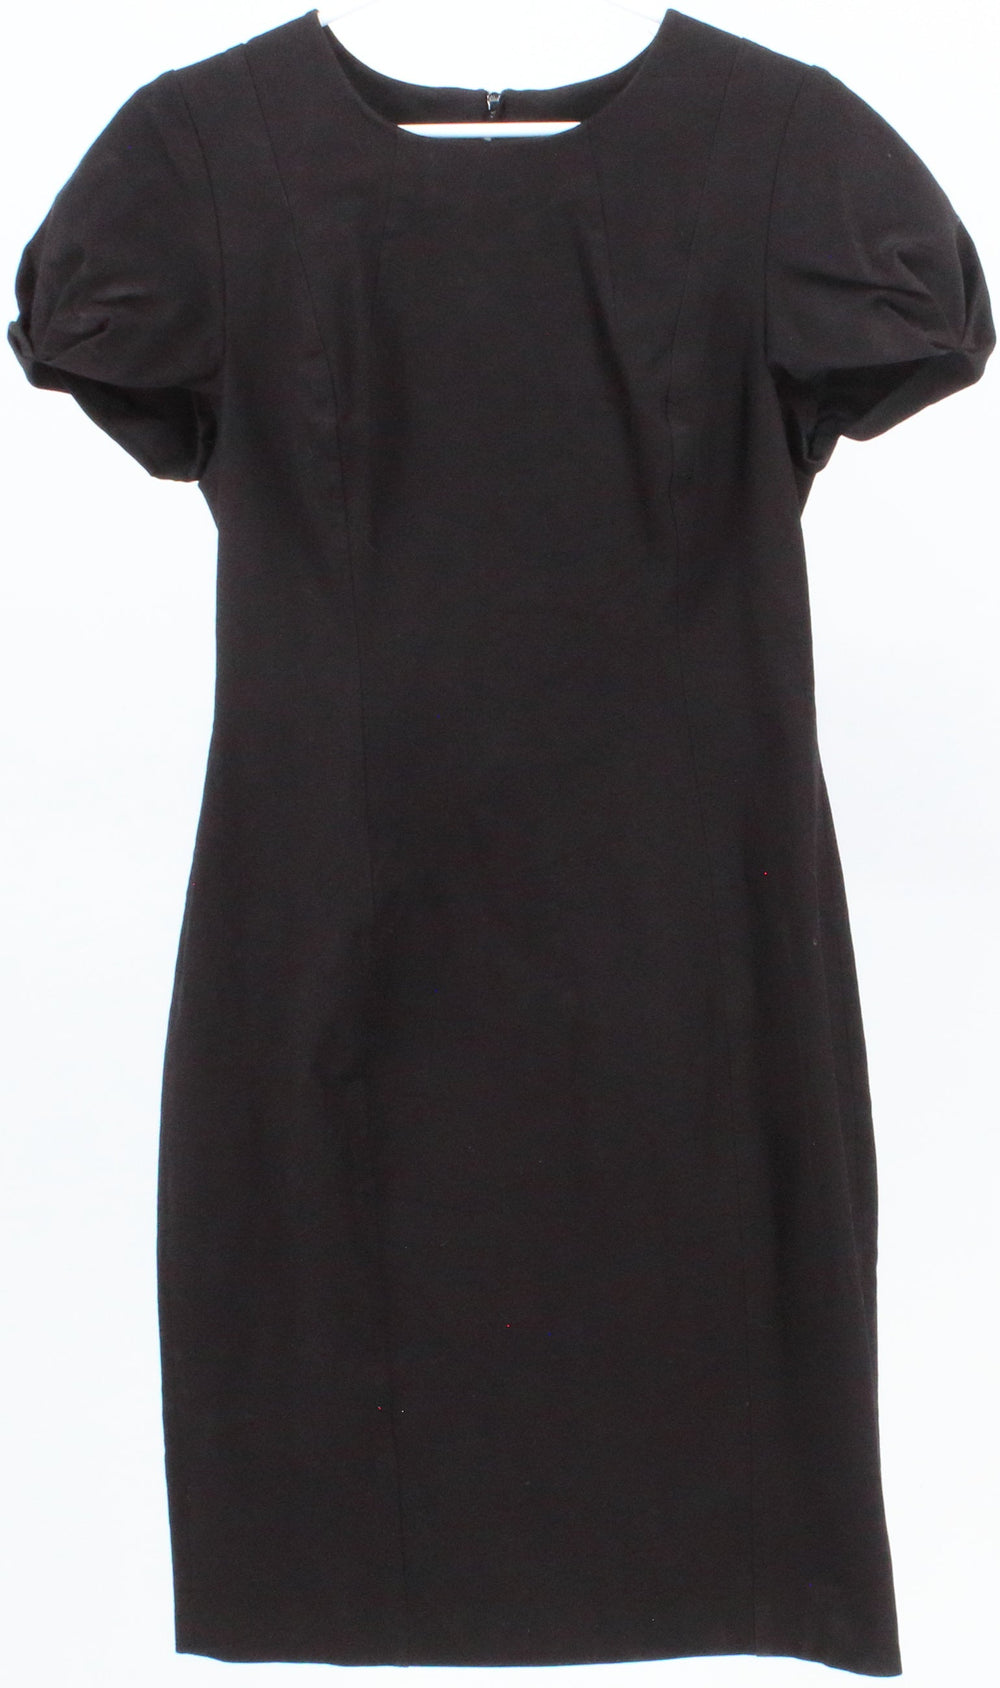 Banana Republic Black Short Sleeve Dress